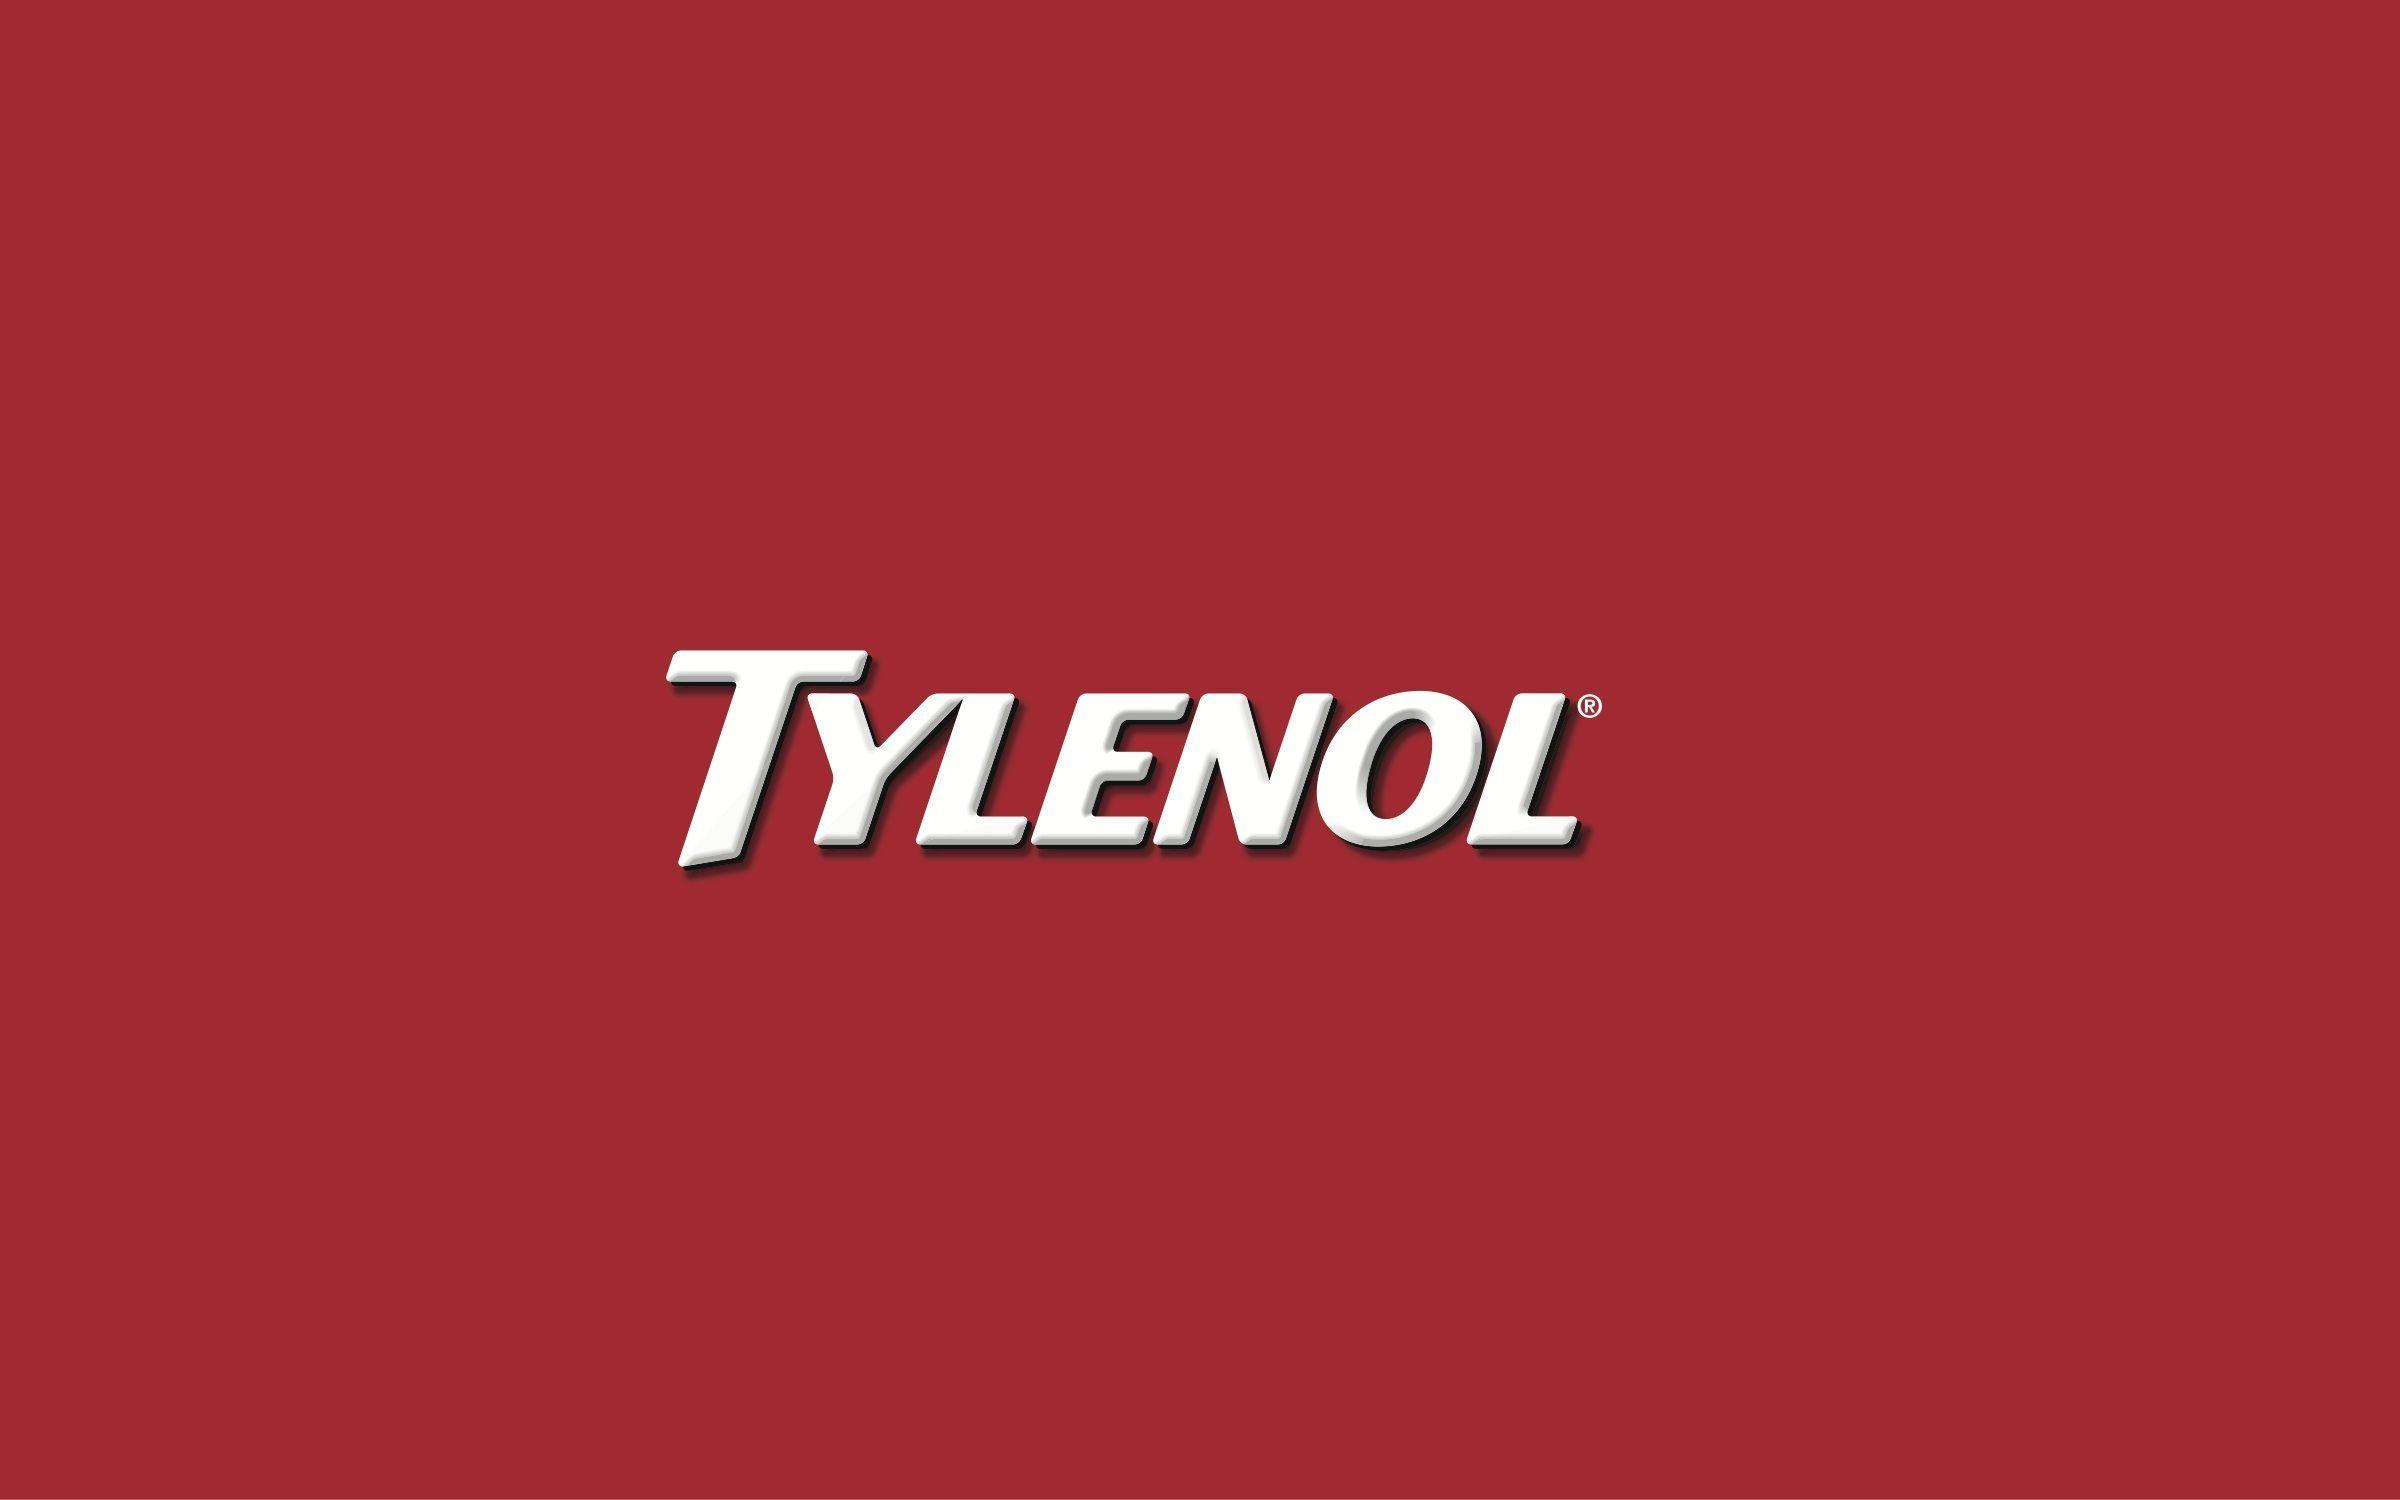 Tylenol Logo - tylenol logo - Google Search | Health, Wellness and Medical Brands ...